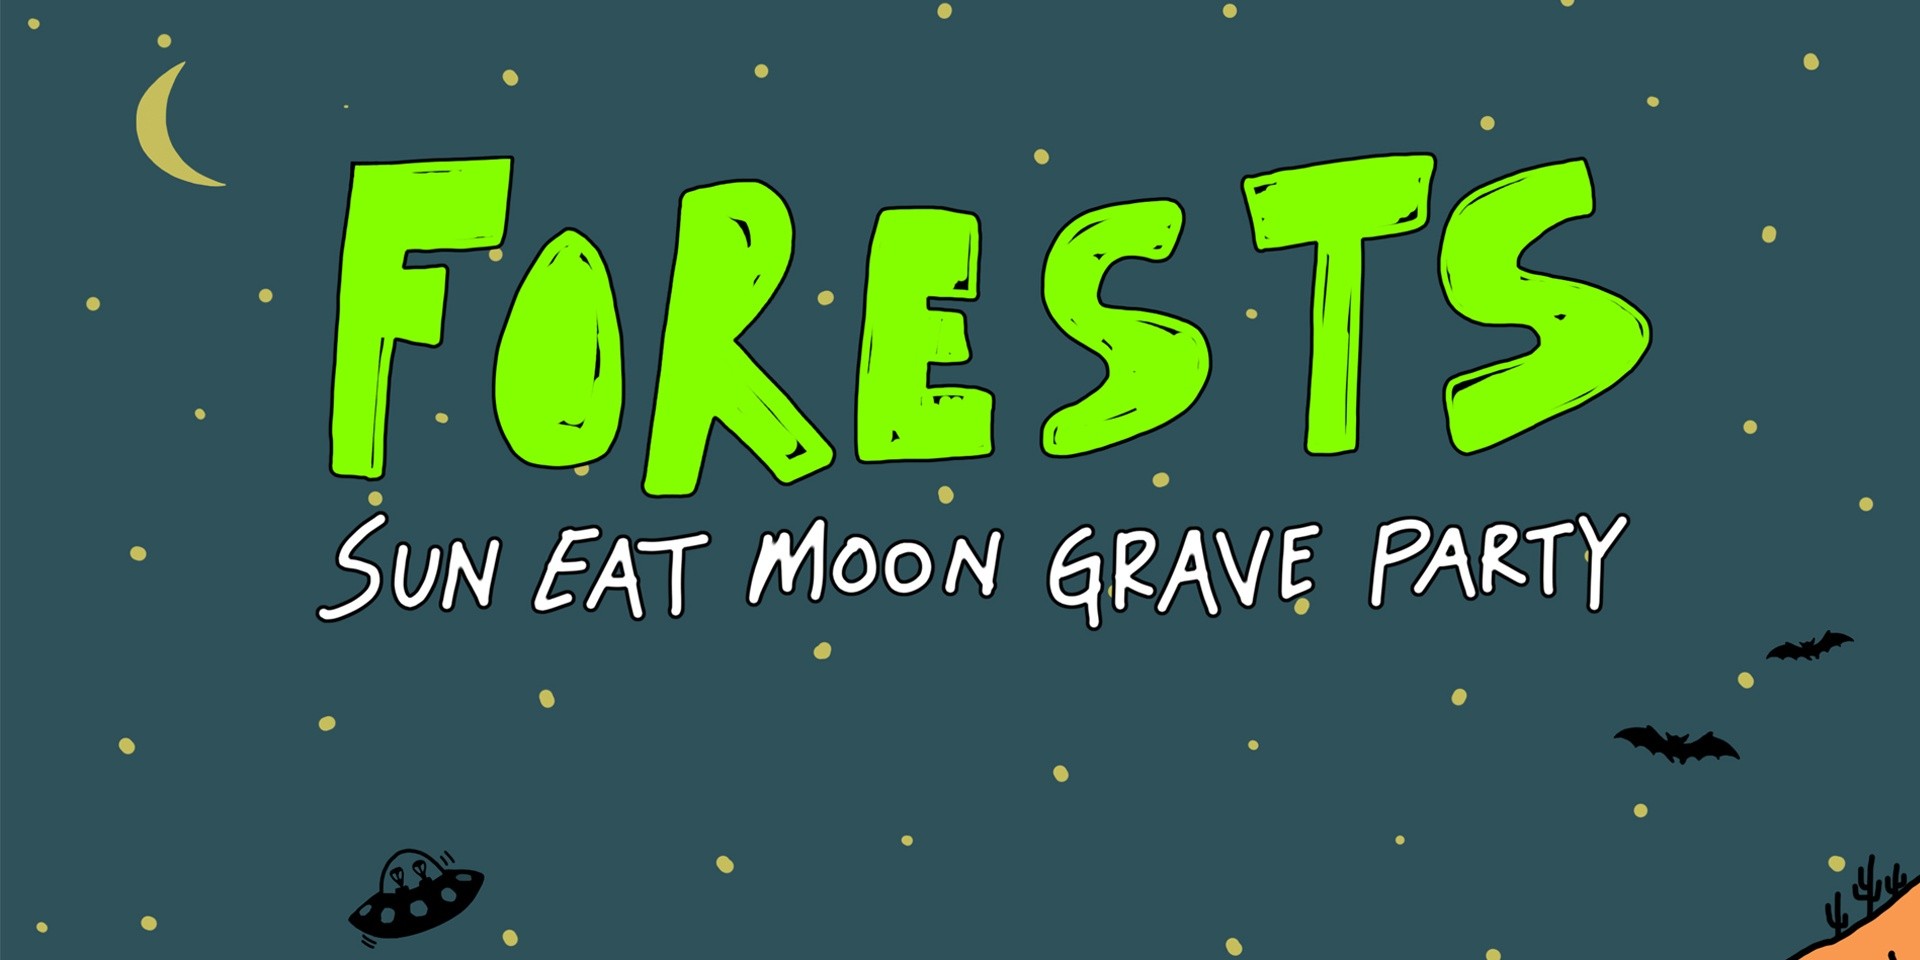 Stream Forests' wonderful sad rave album, Sun Eat Moon Grave Party